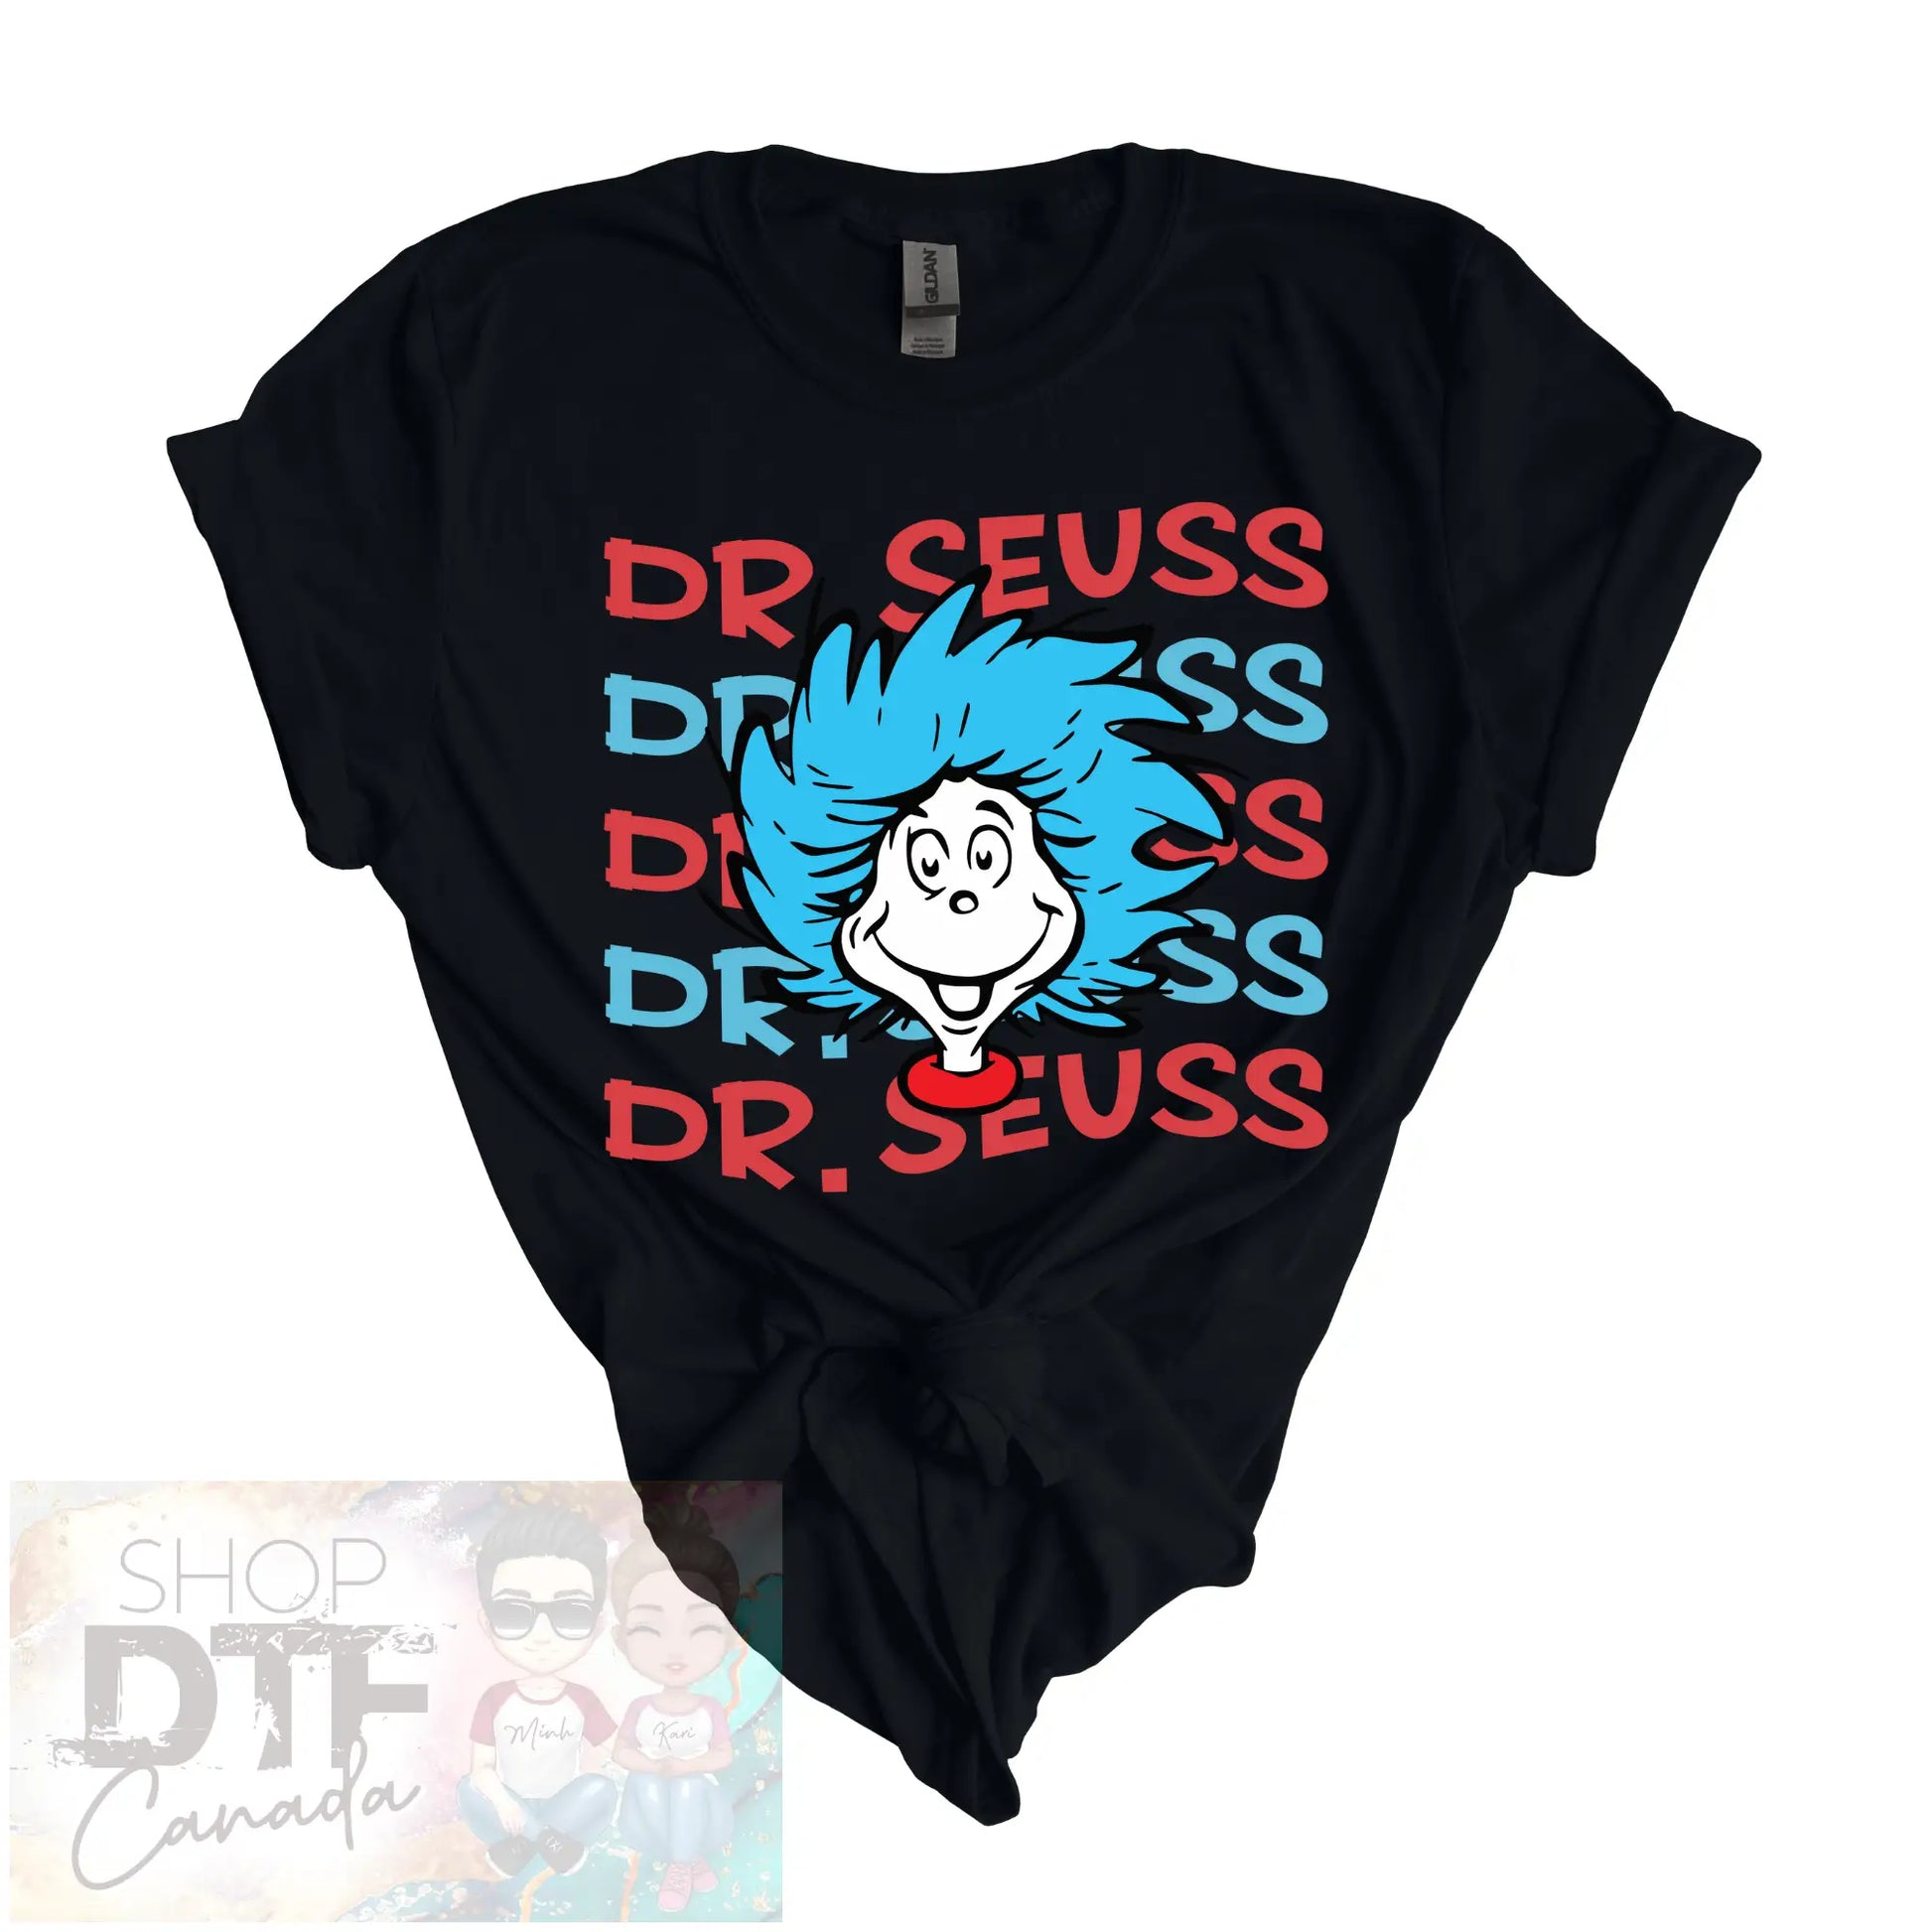 Dr. Seuss - Thing 1 - Shirts & Tops